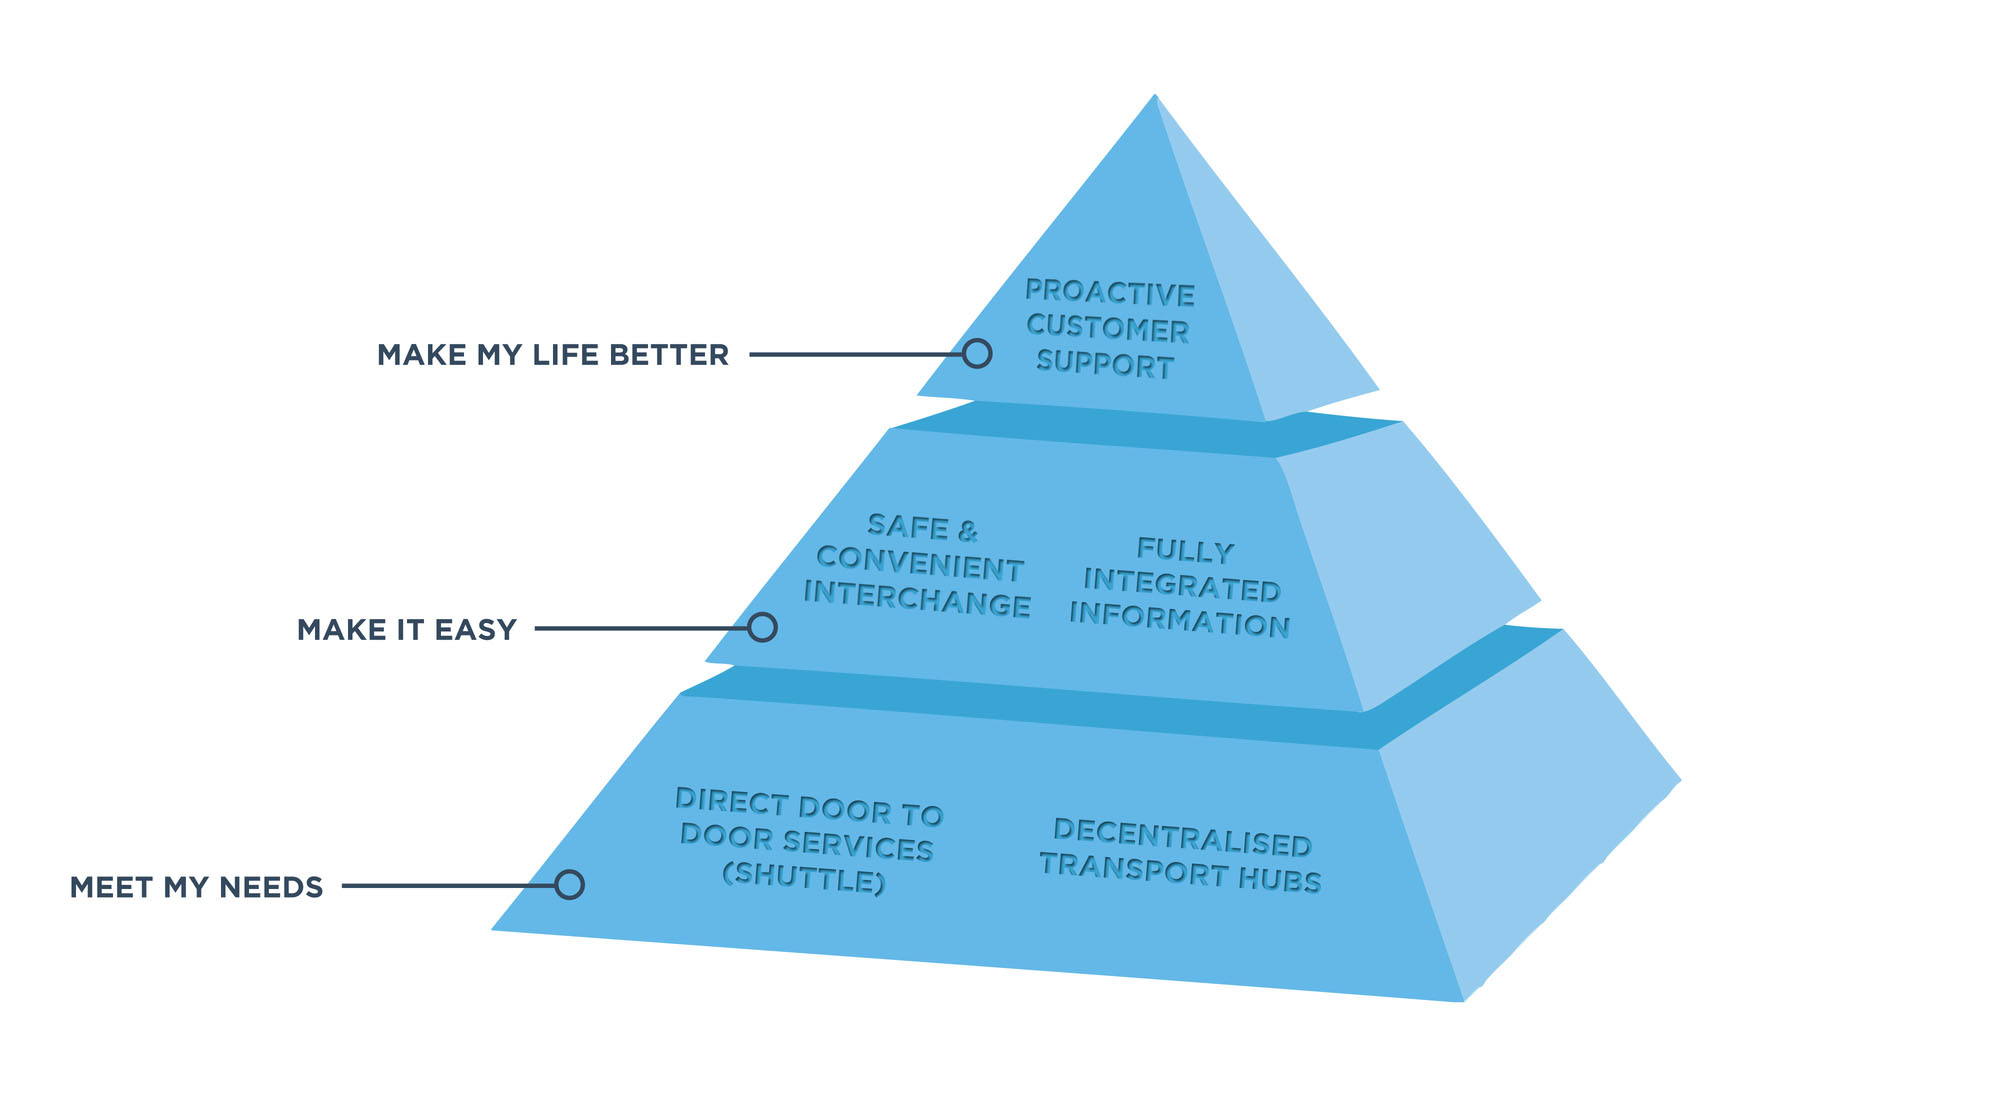 Proto customer needs prioritisation pyramid